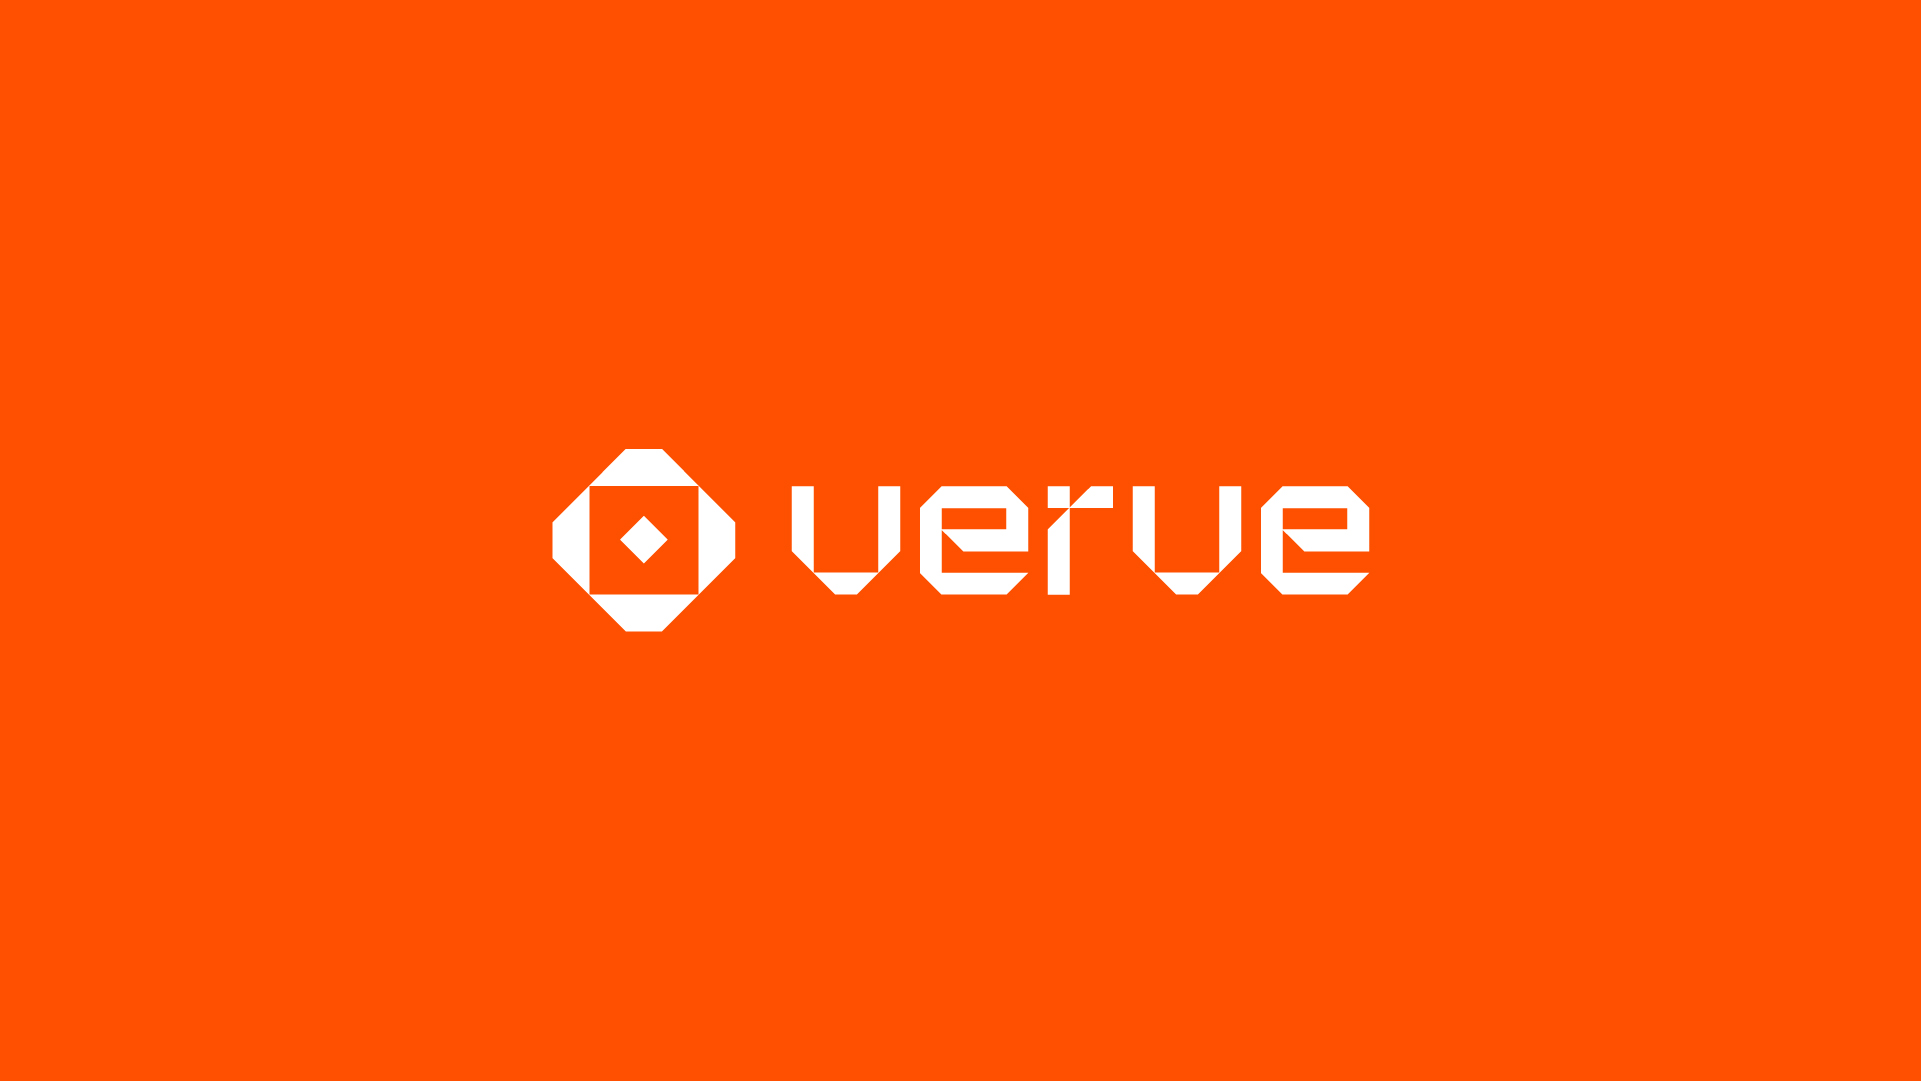 Verve 健身服装和设备品牌命名logo设计vi设计